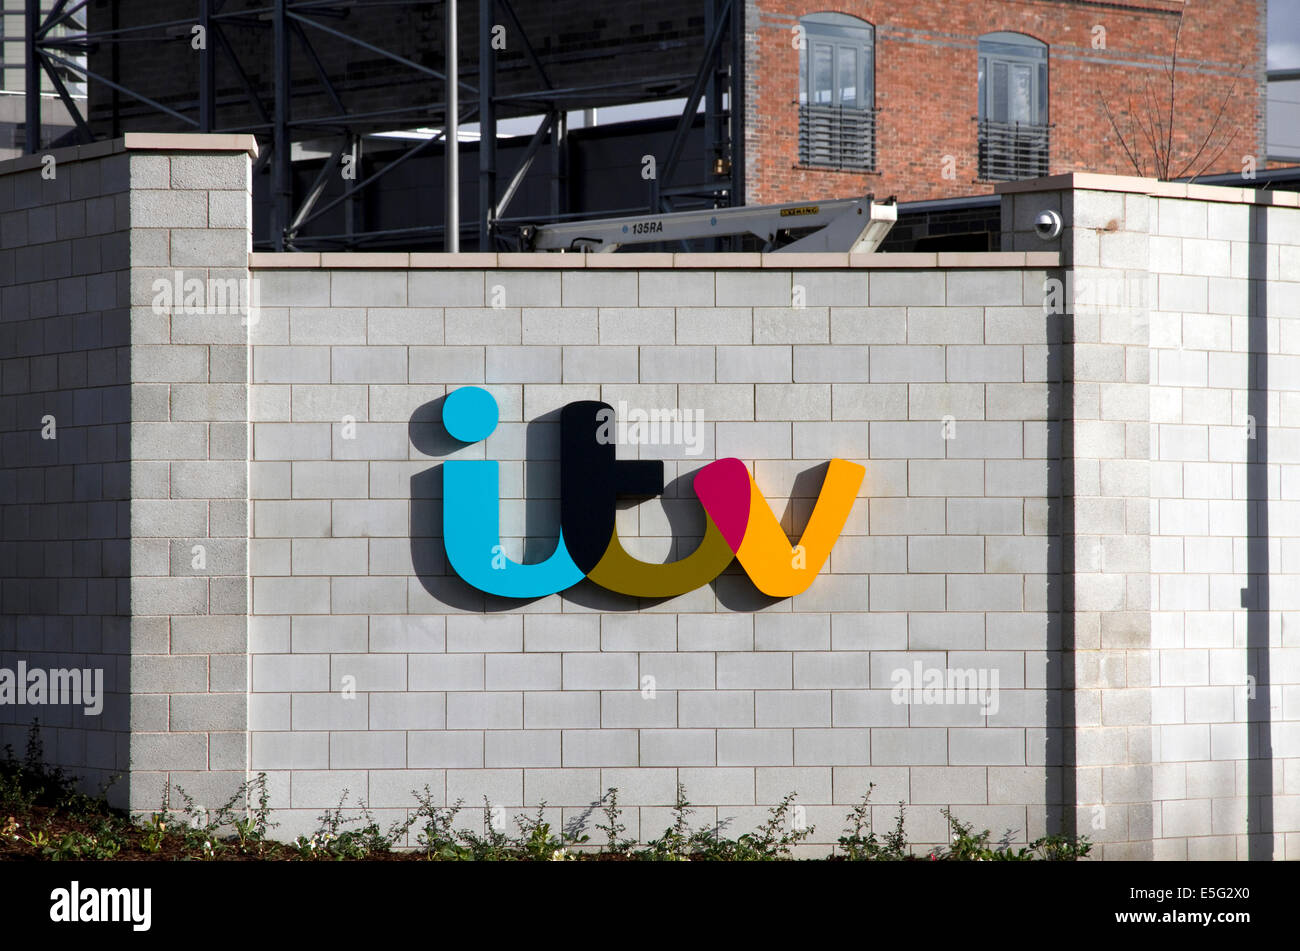 ITVs Trafford Wharf Studios (New home for Coronation Street) , Media City, Salford Quays/ Trafford Park, Manchester, England, UK Stock Photo